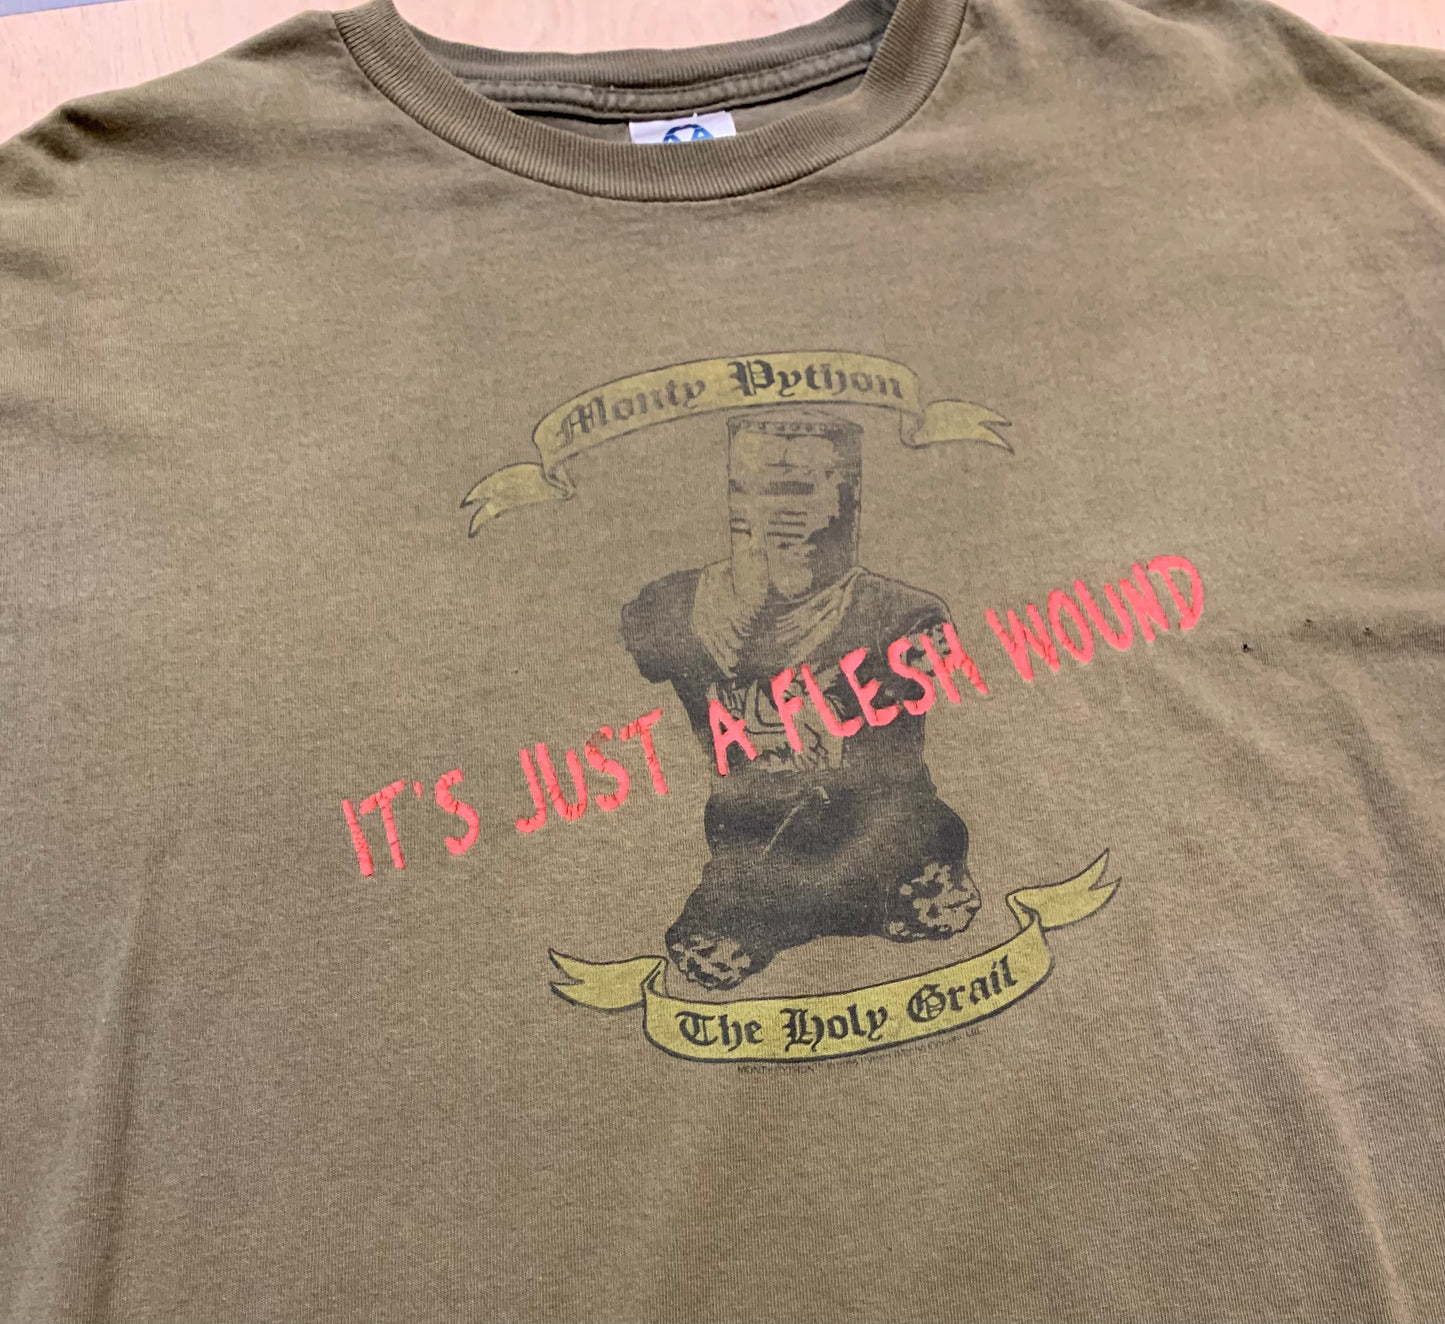 2005 Monty Python "It's Just A Flesh Wound" Single Stitch T-Shirt